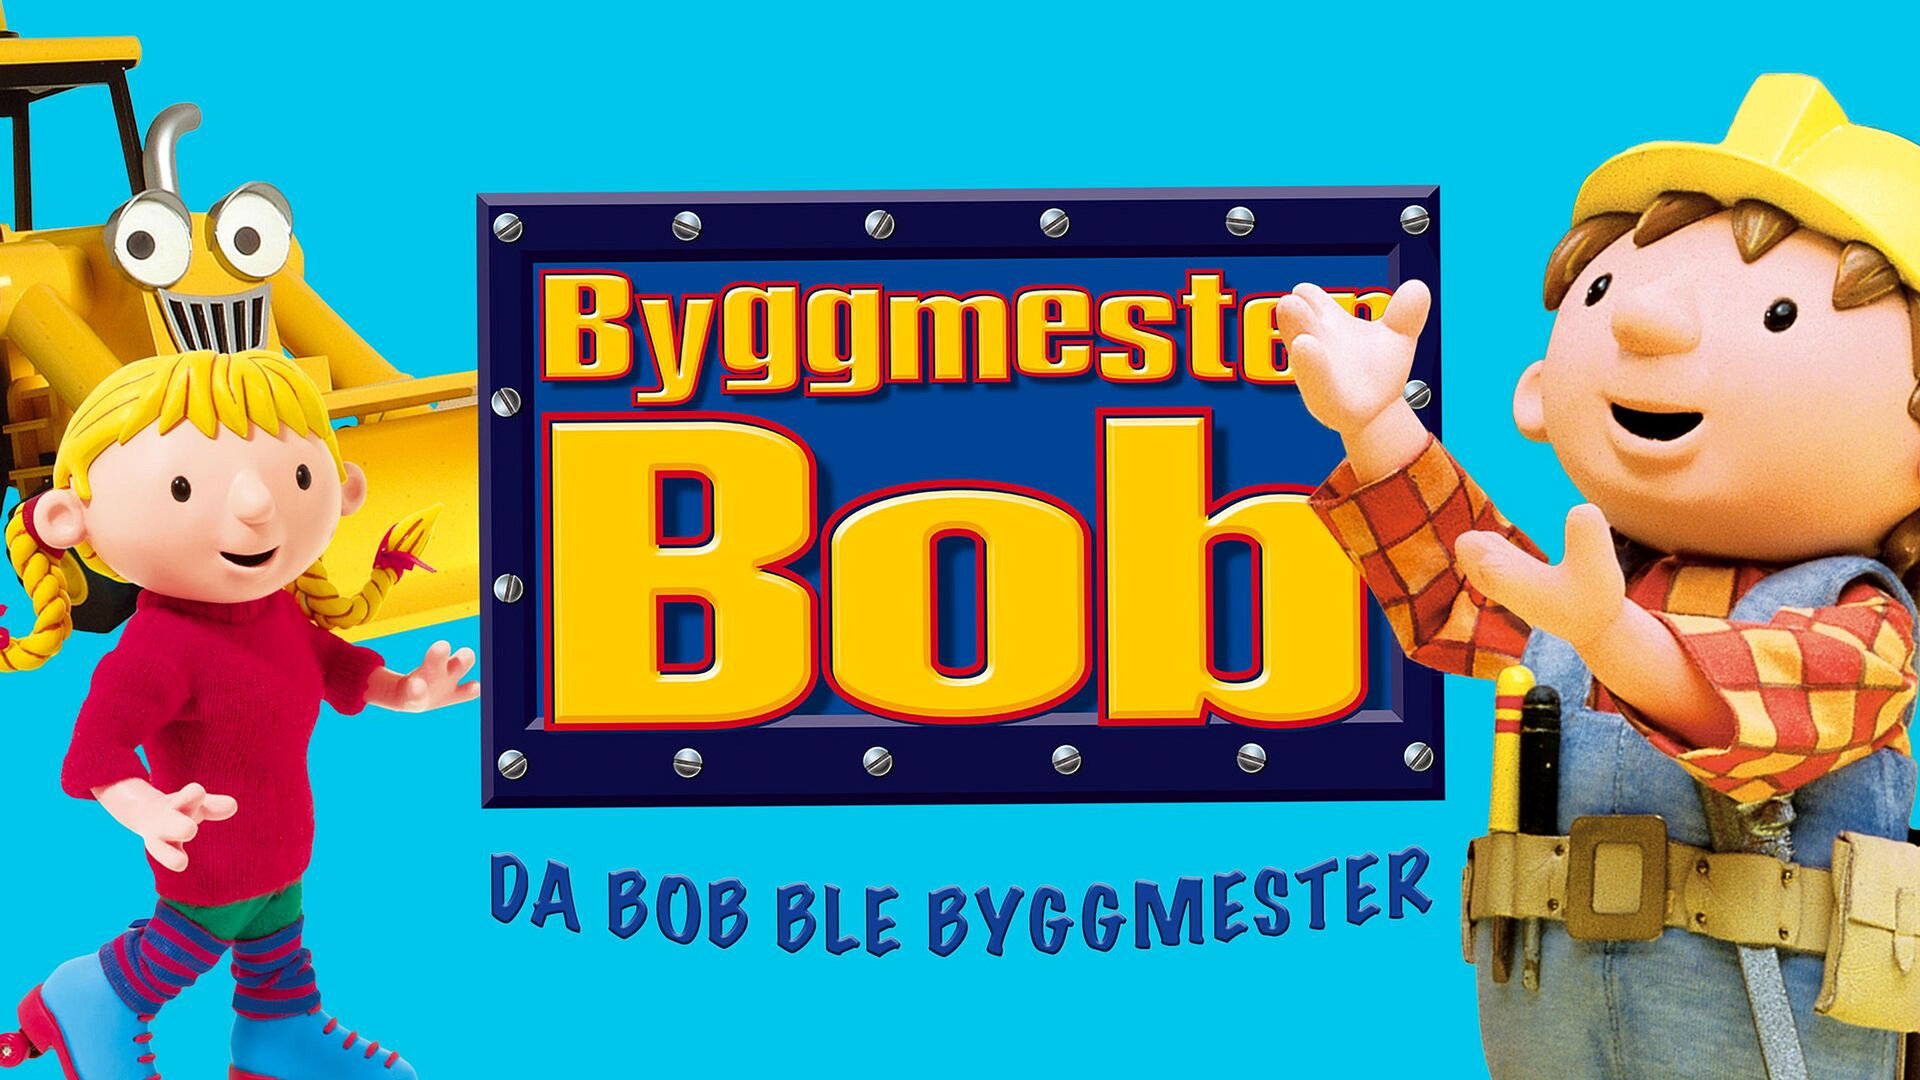 Byggmester Bob - Da Bob ble byggmester